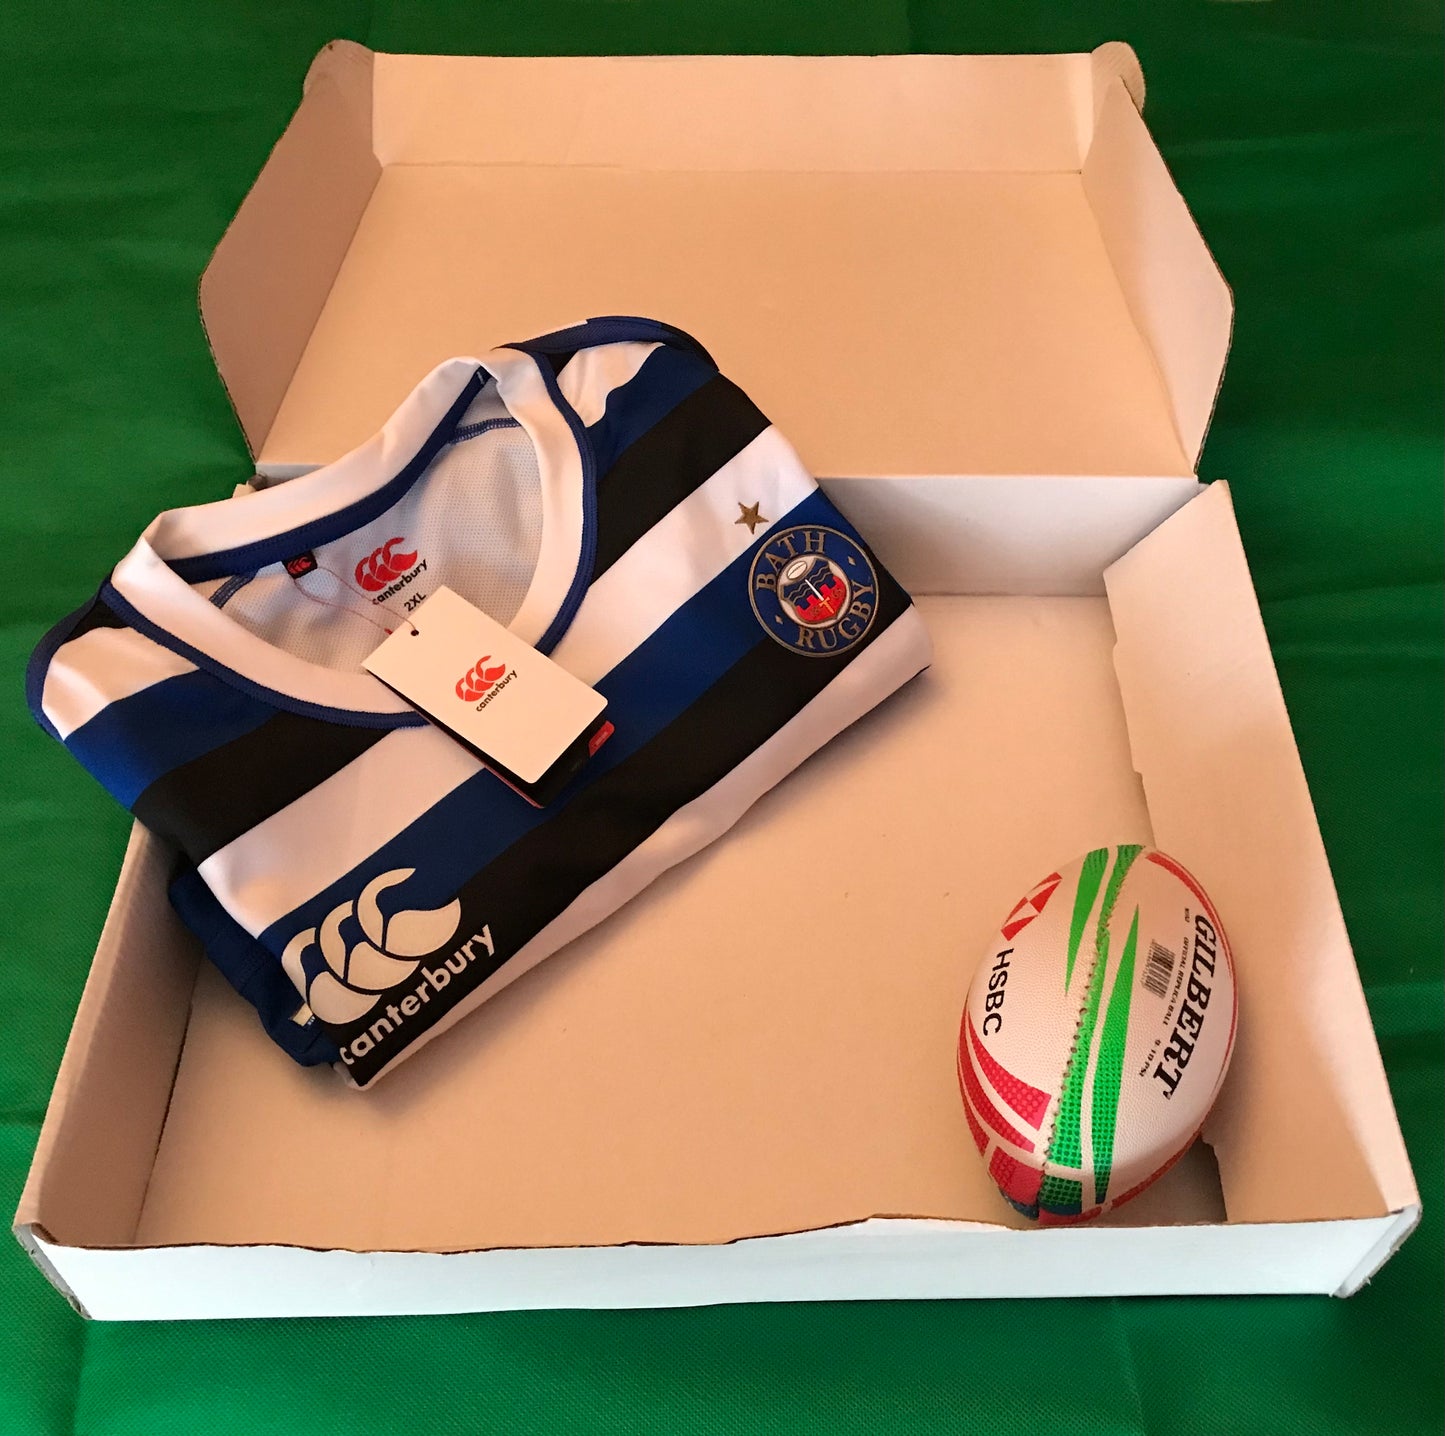 Rugby Shirt Mystery Box - Replica - Brand New